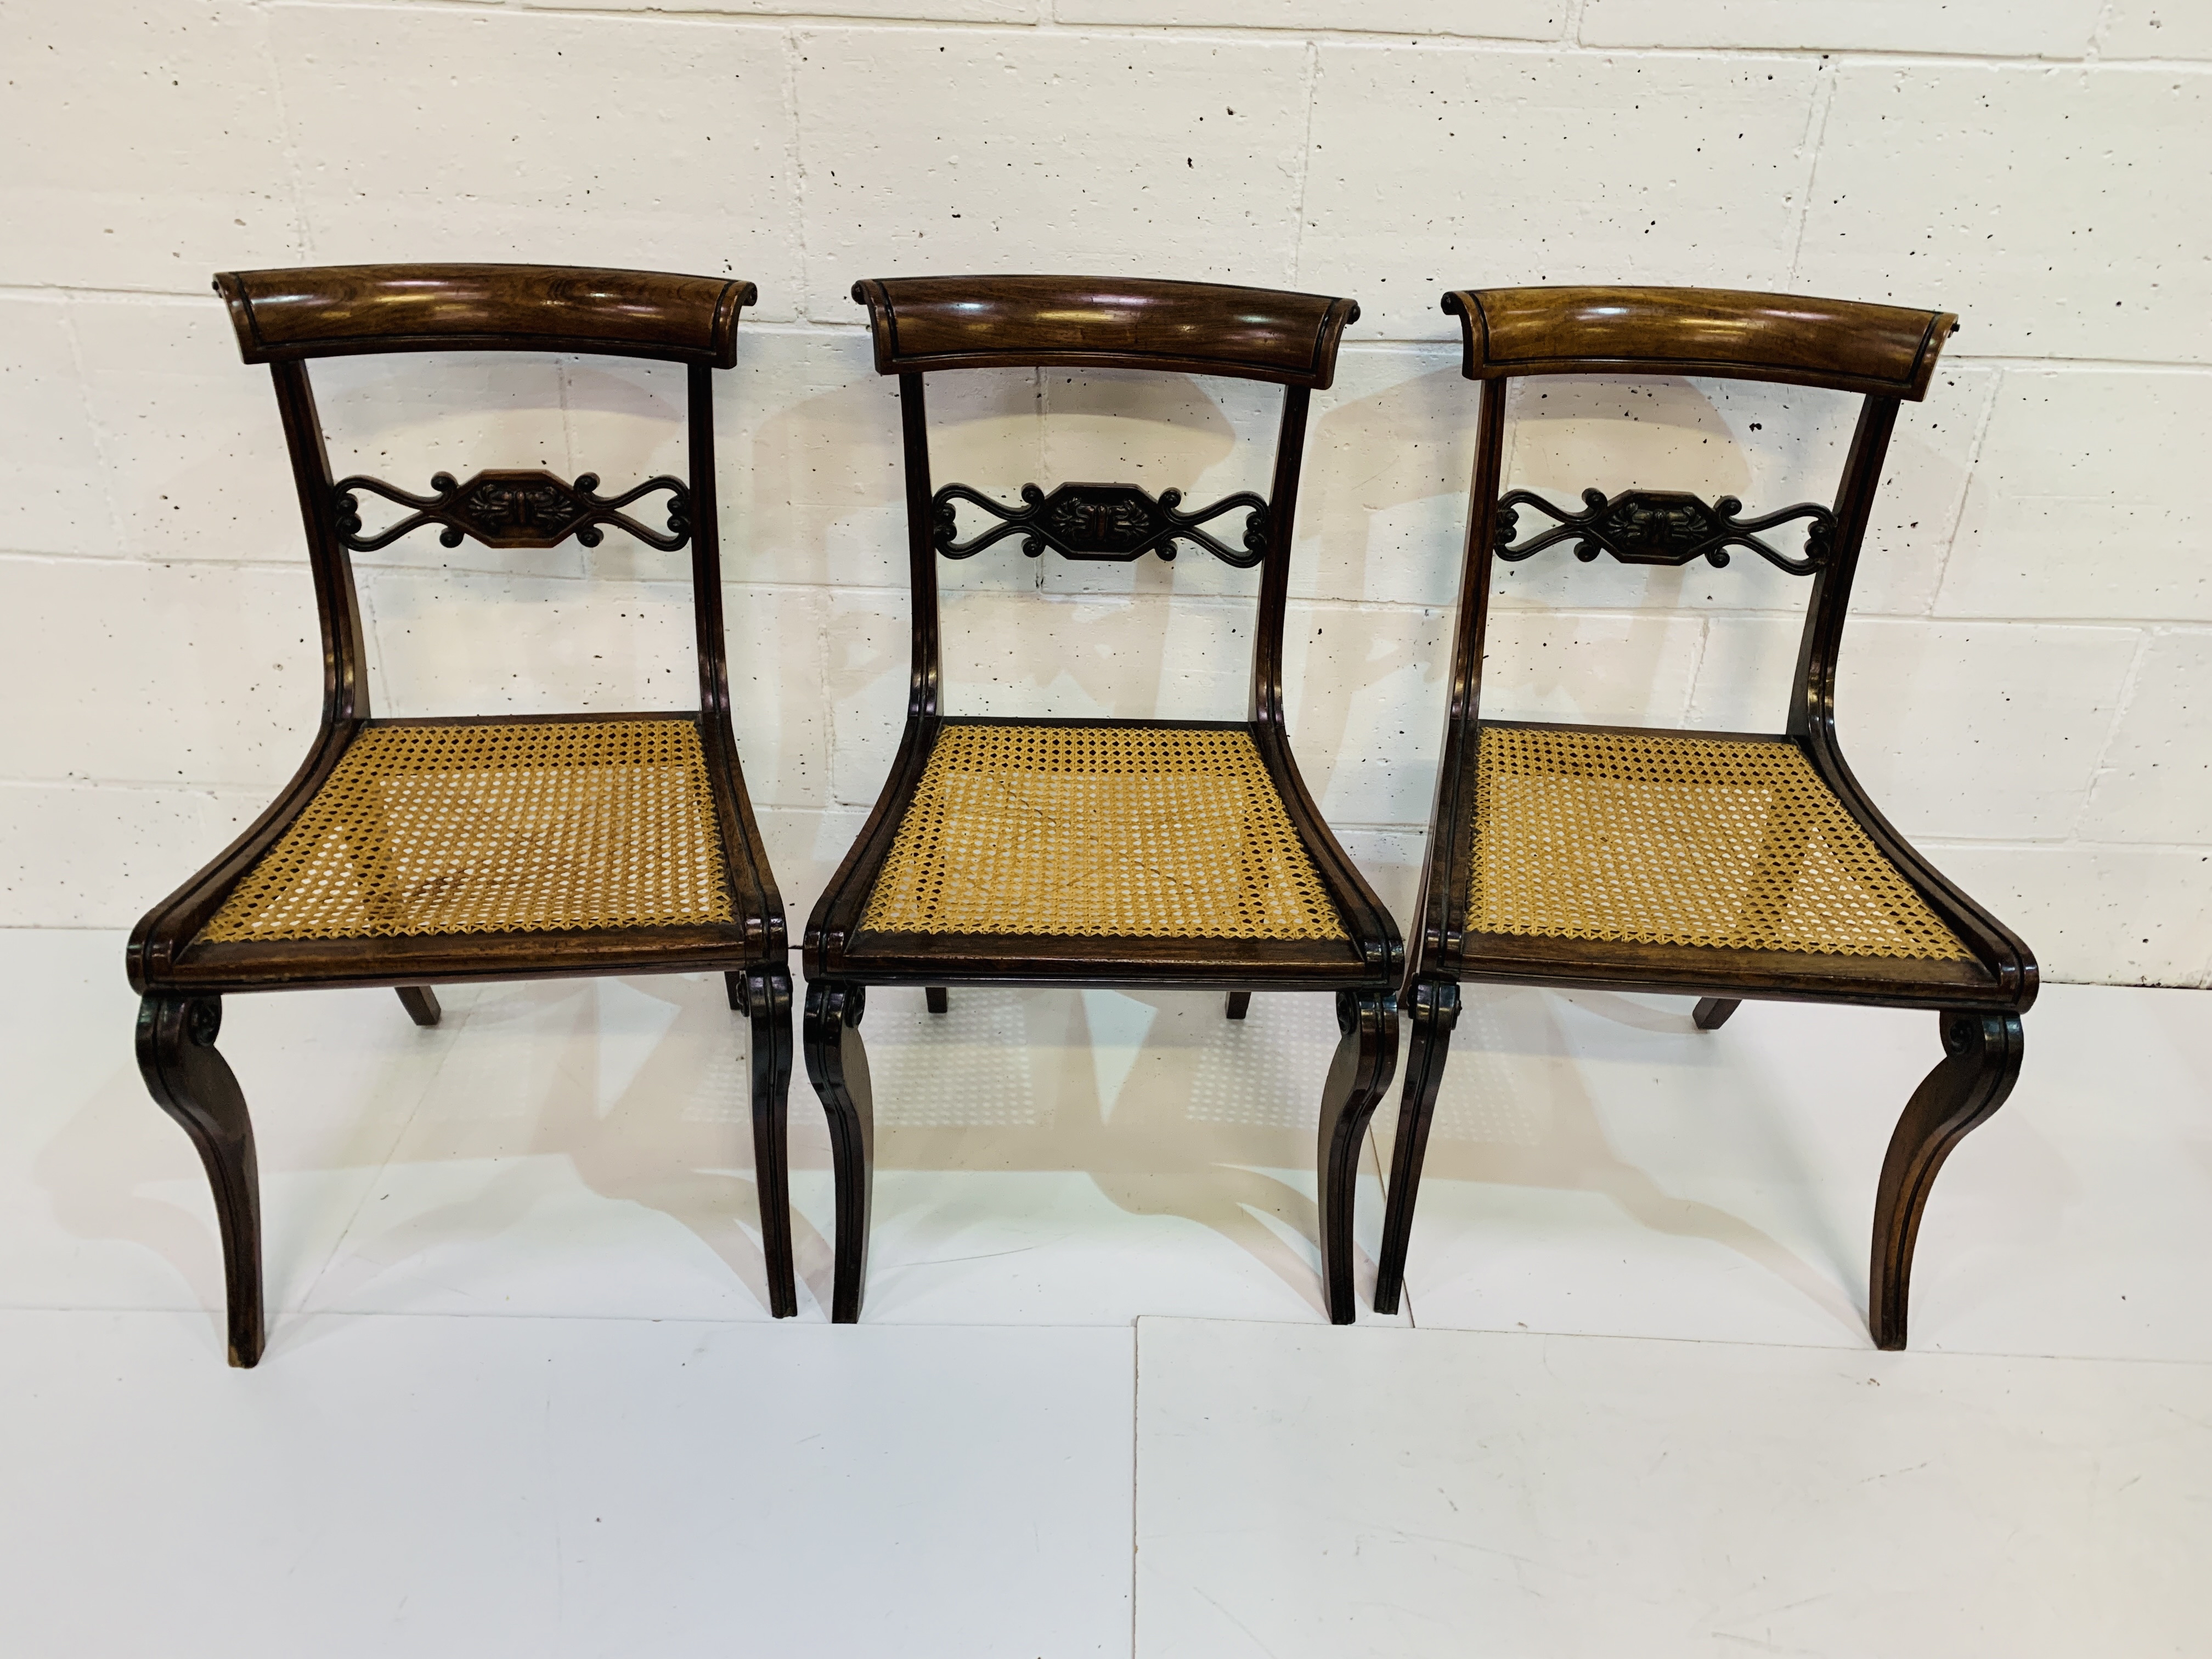 Three mahogany cane seat dining chairs - Image 2 of 5